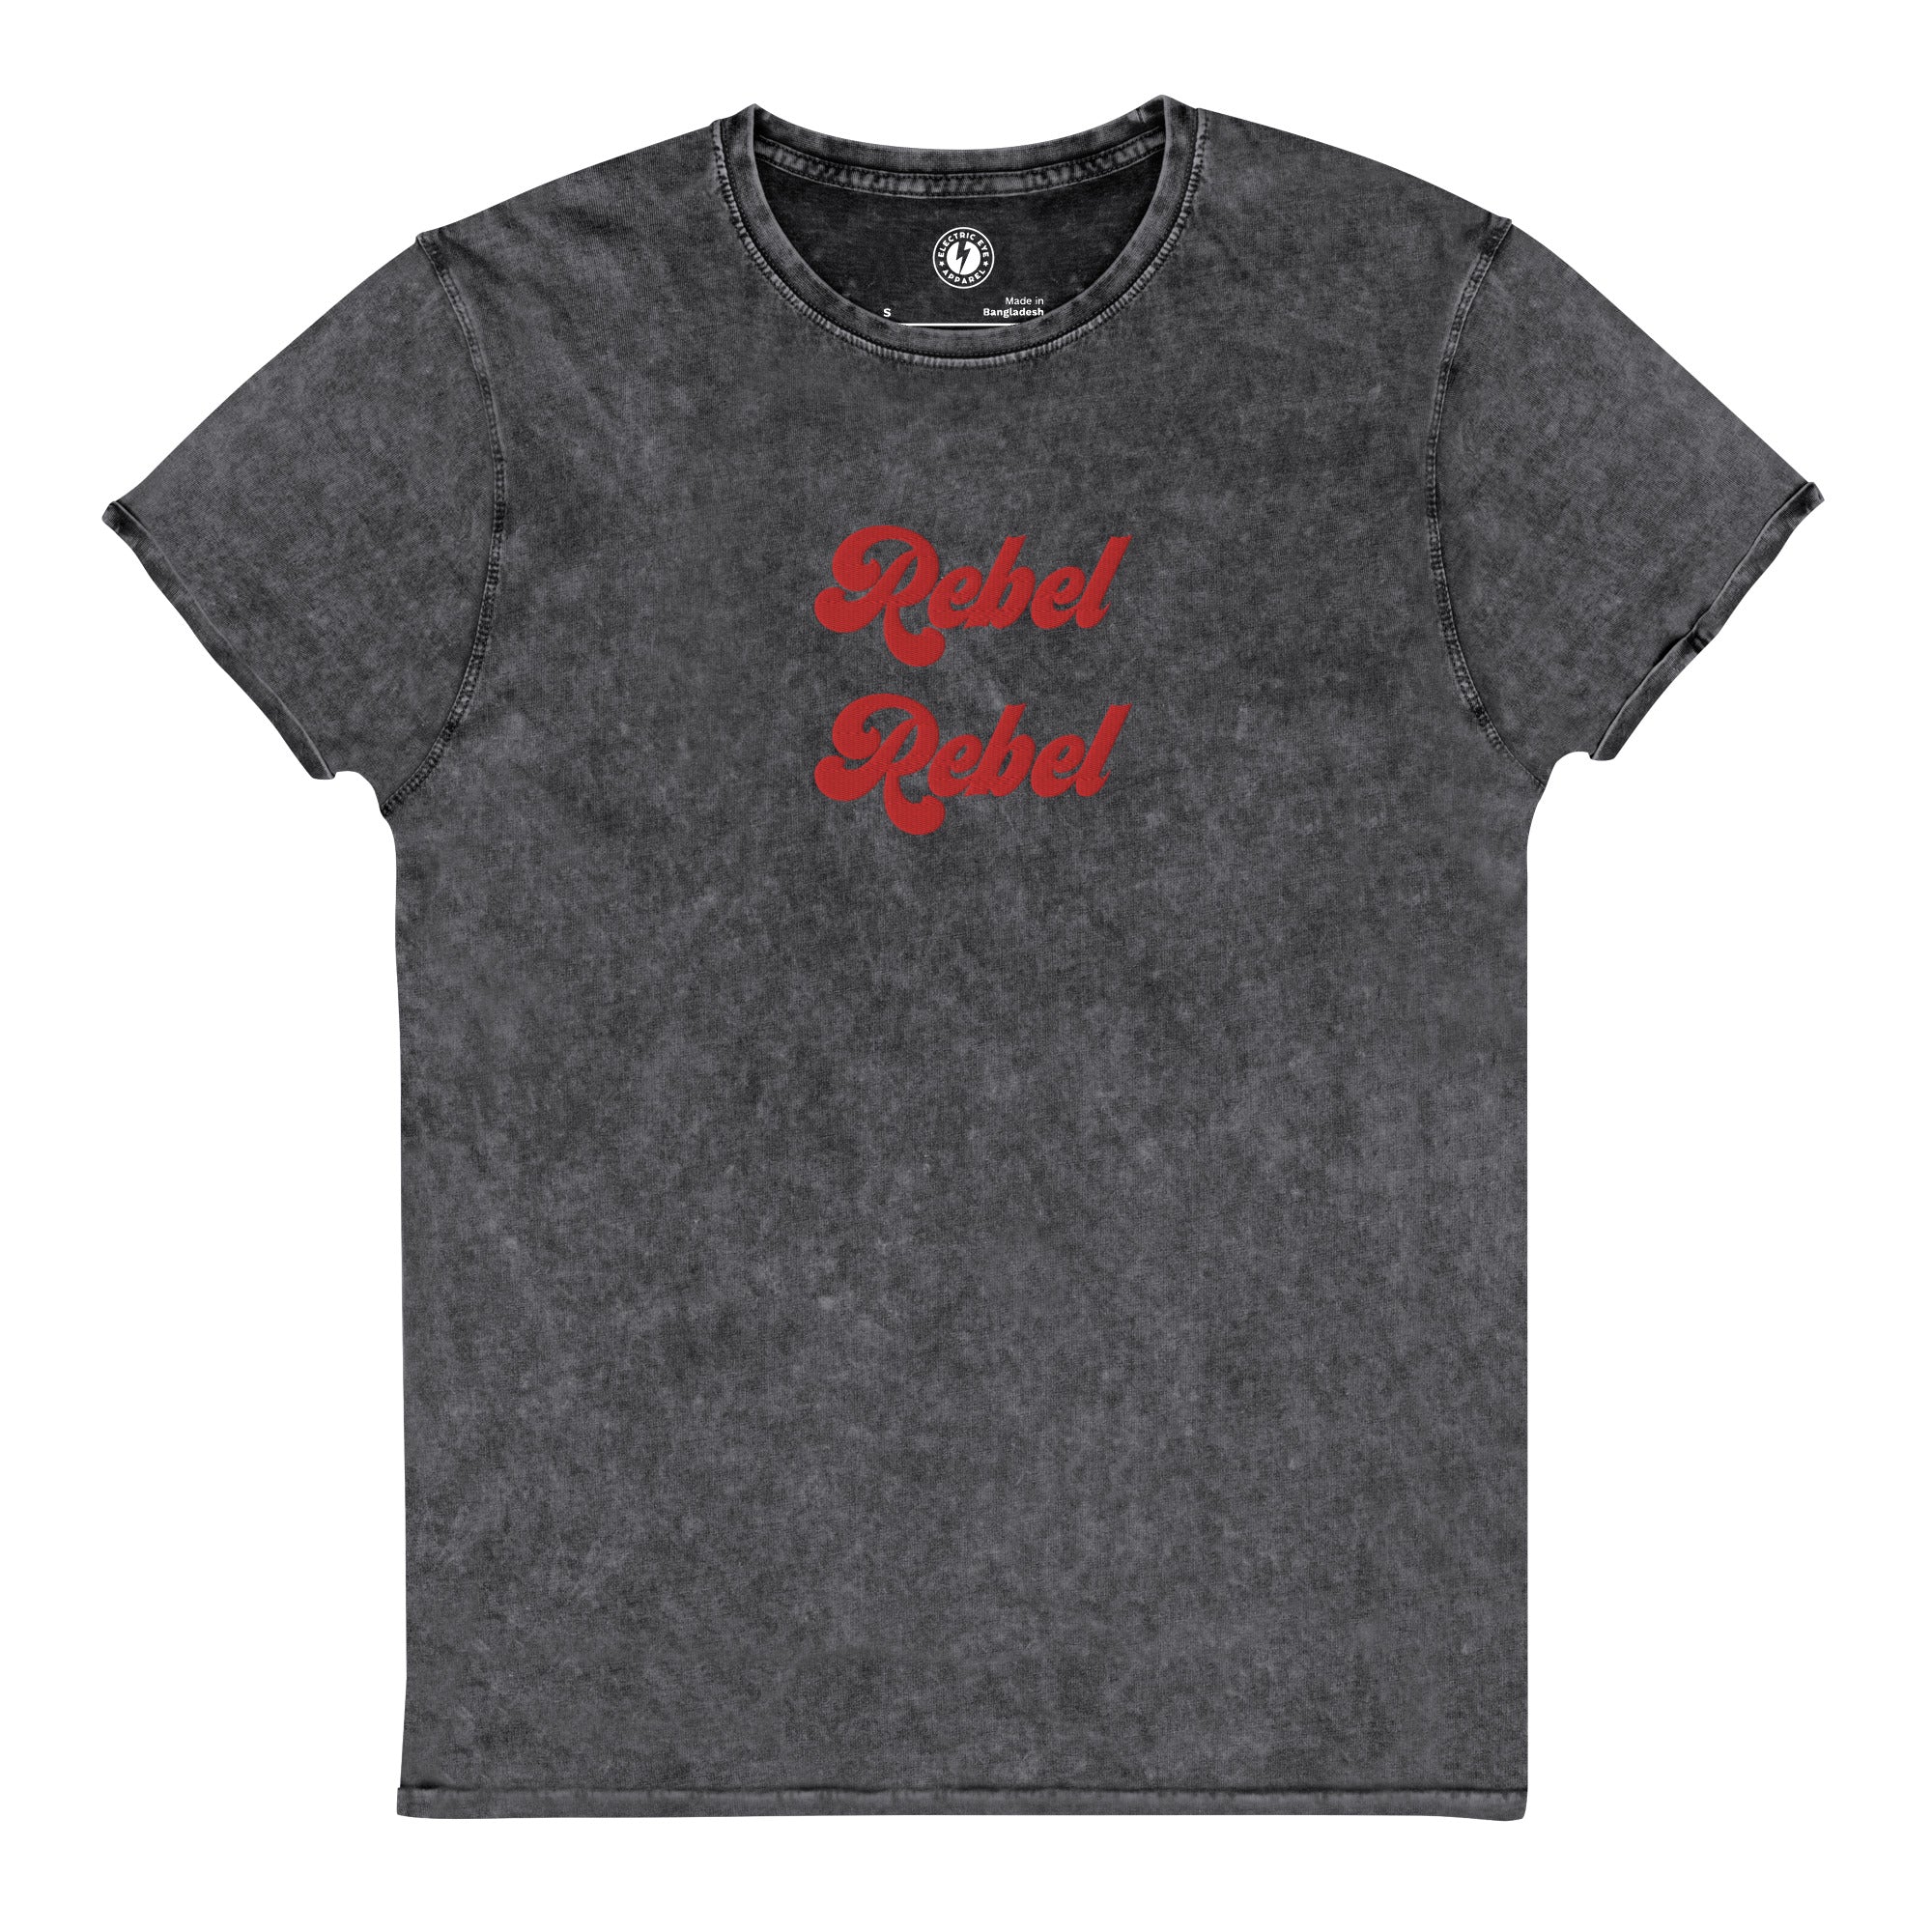 REBEL REBEL Camiseta unisex estilo denim envejecido vintage bordado